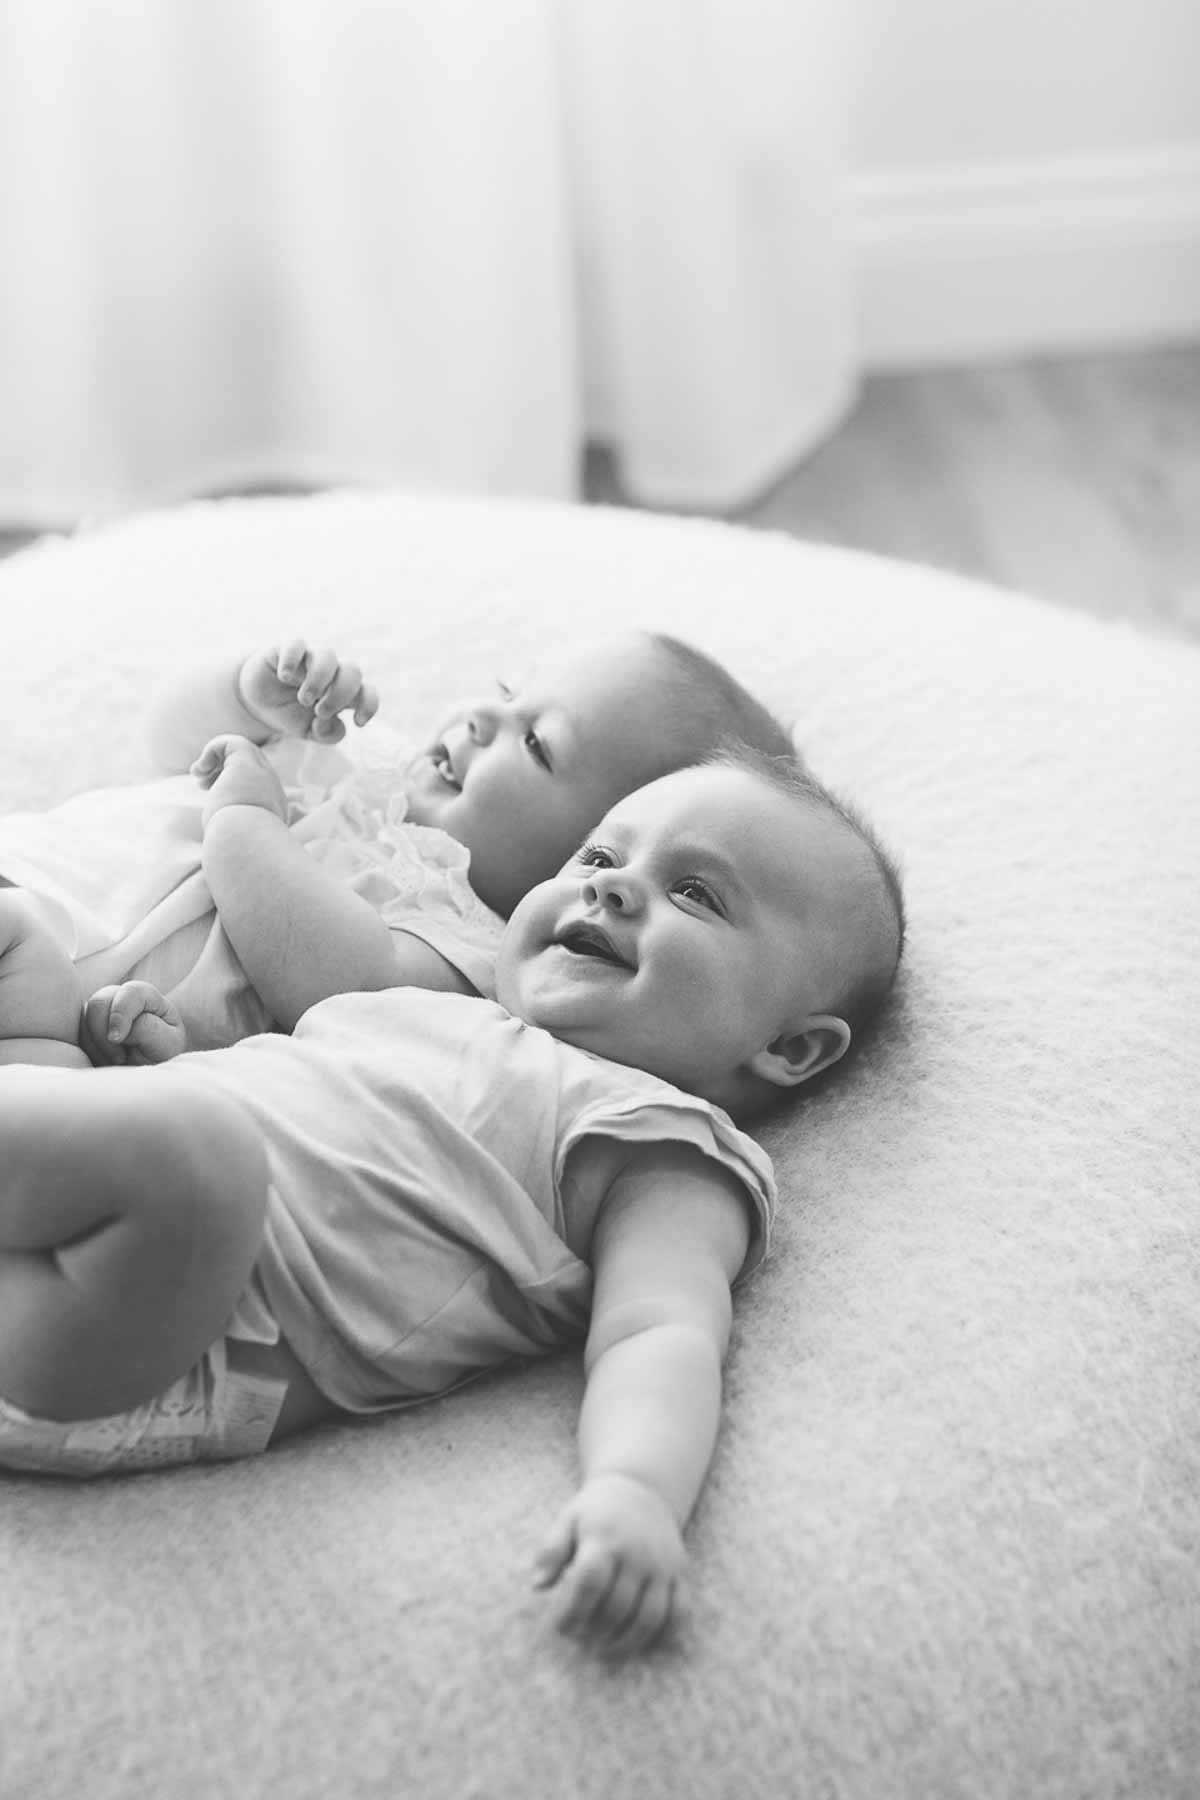 Baby Fotografering i Trygge, Varme & Hyggelige Rammer